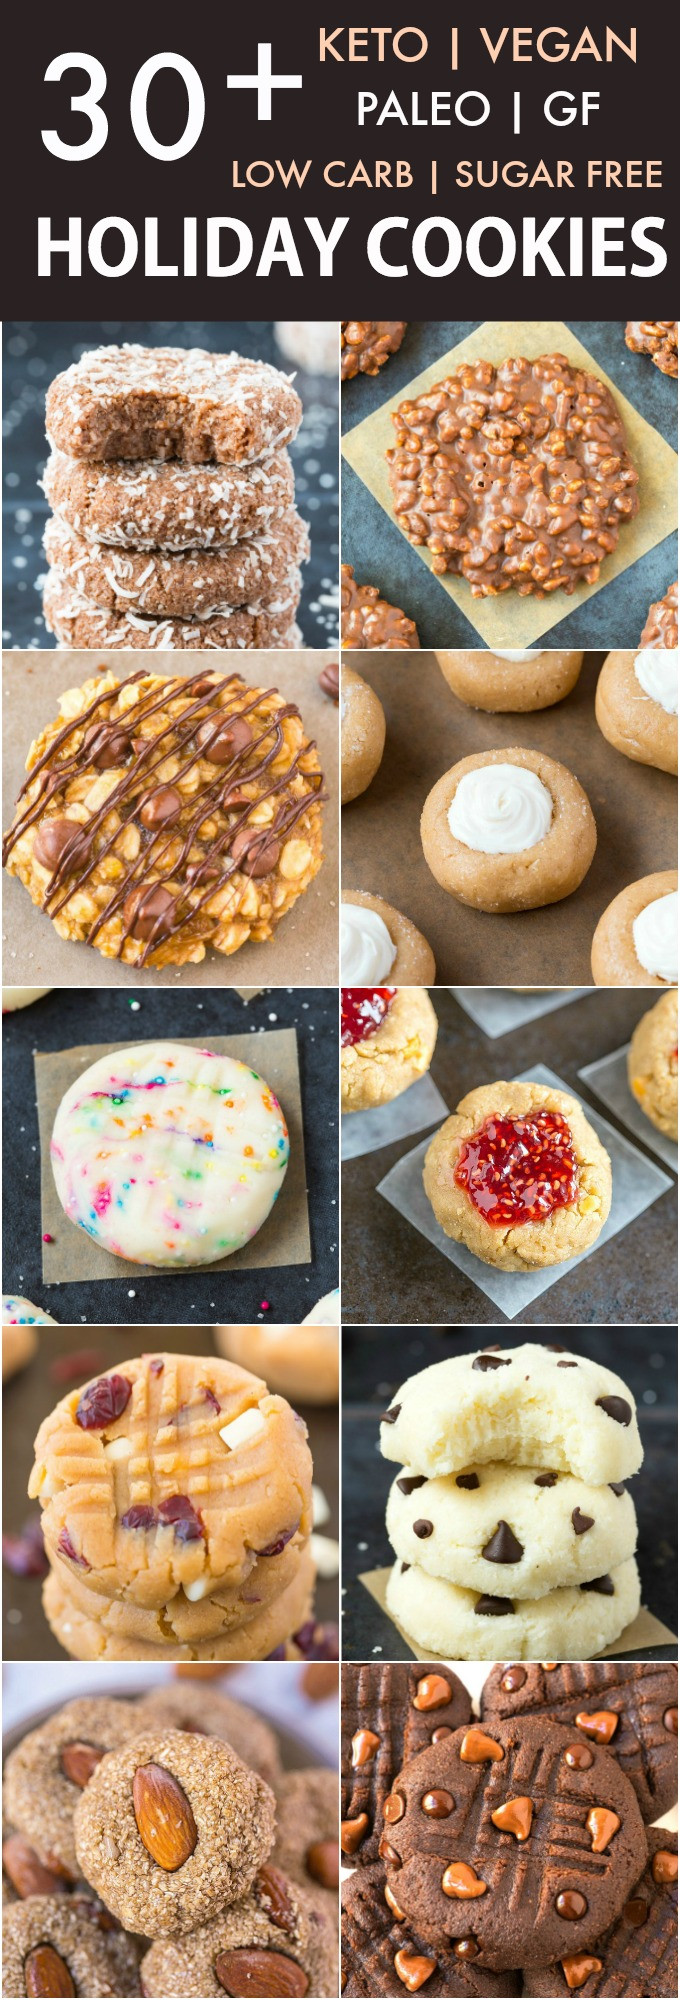 Keto Christmas Cookies
 30 Vegan Keto Holiday Cookie Recipes Paleo Low Carb